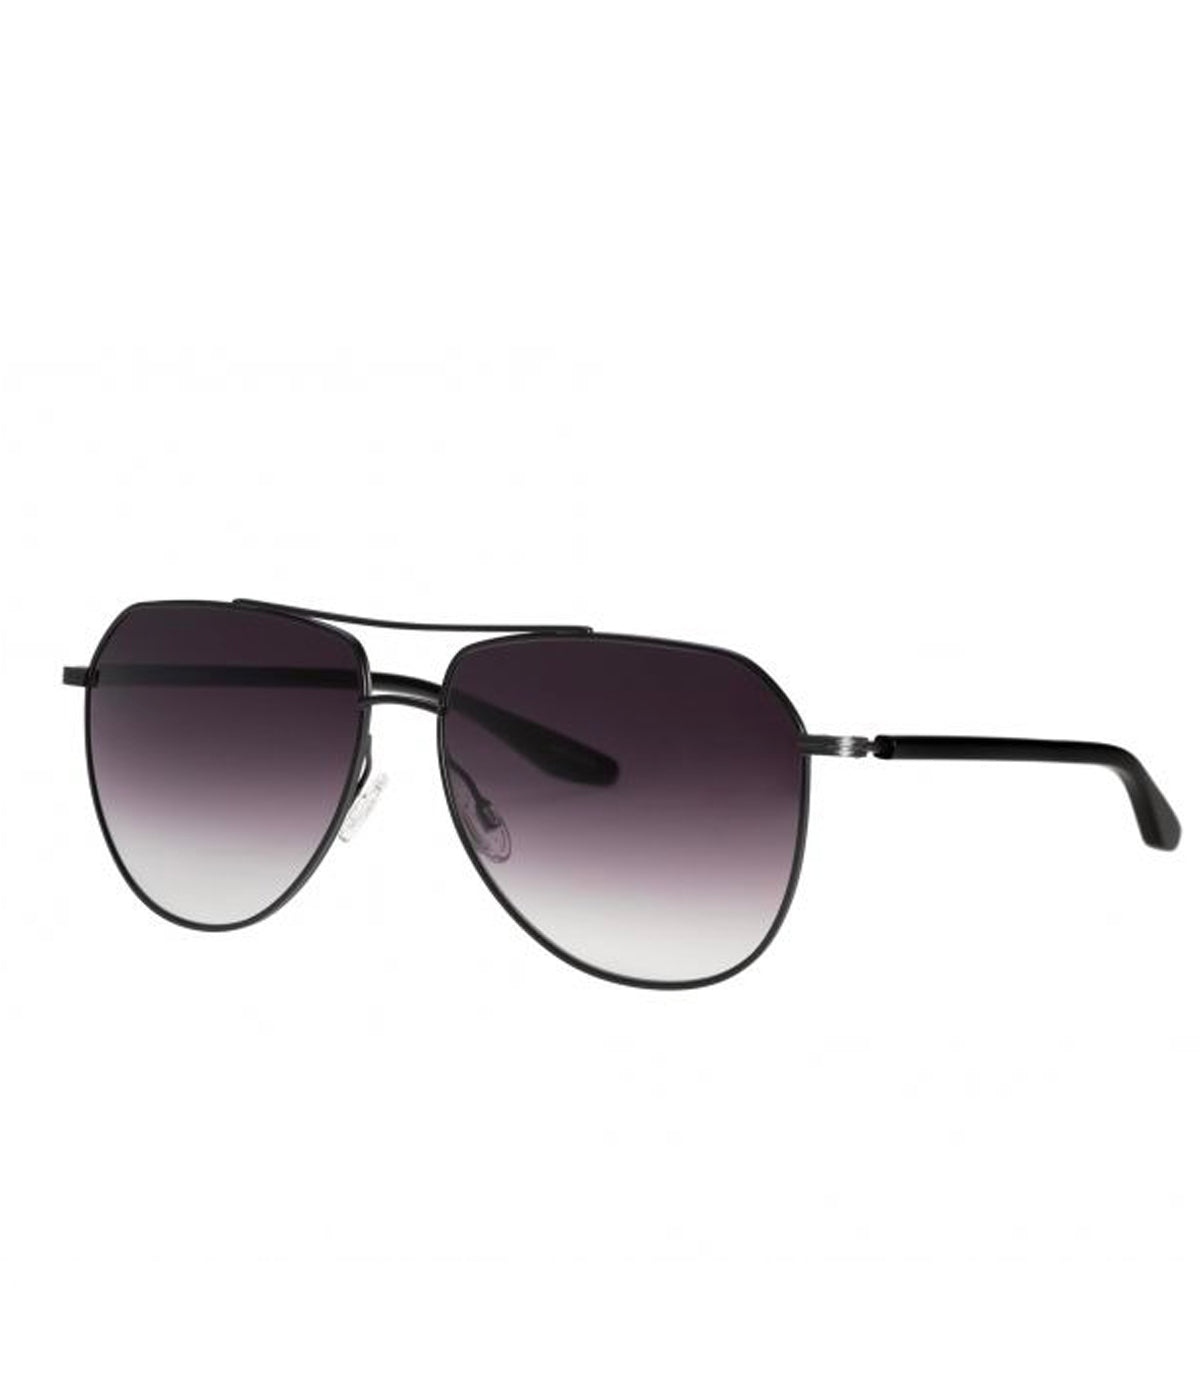 Voltaire Sunglasses in Black Grey